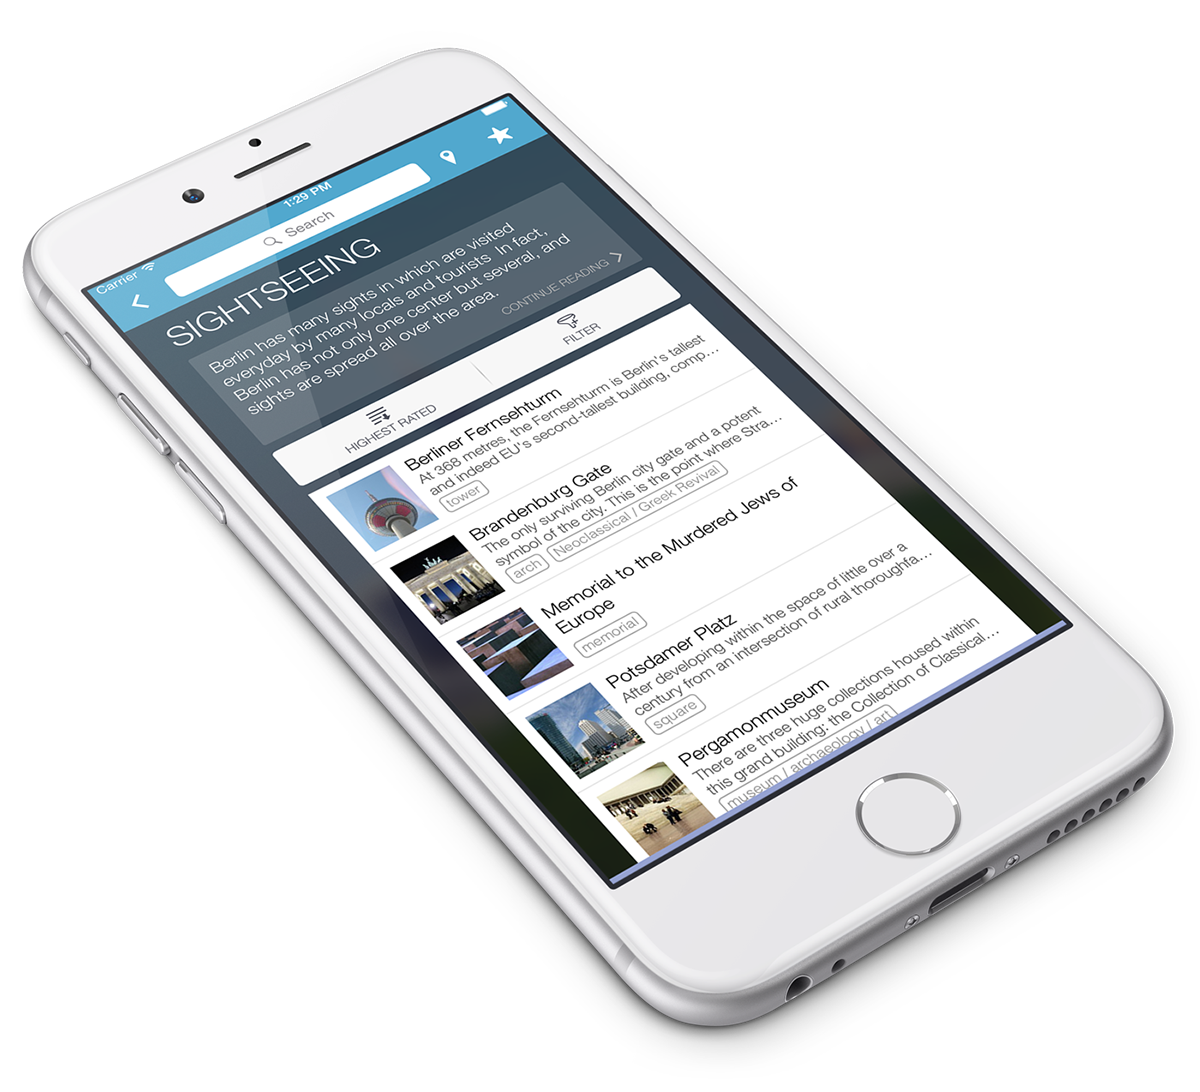 Travel trip triposo ios app app store download free application traveler apple iPad iphone